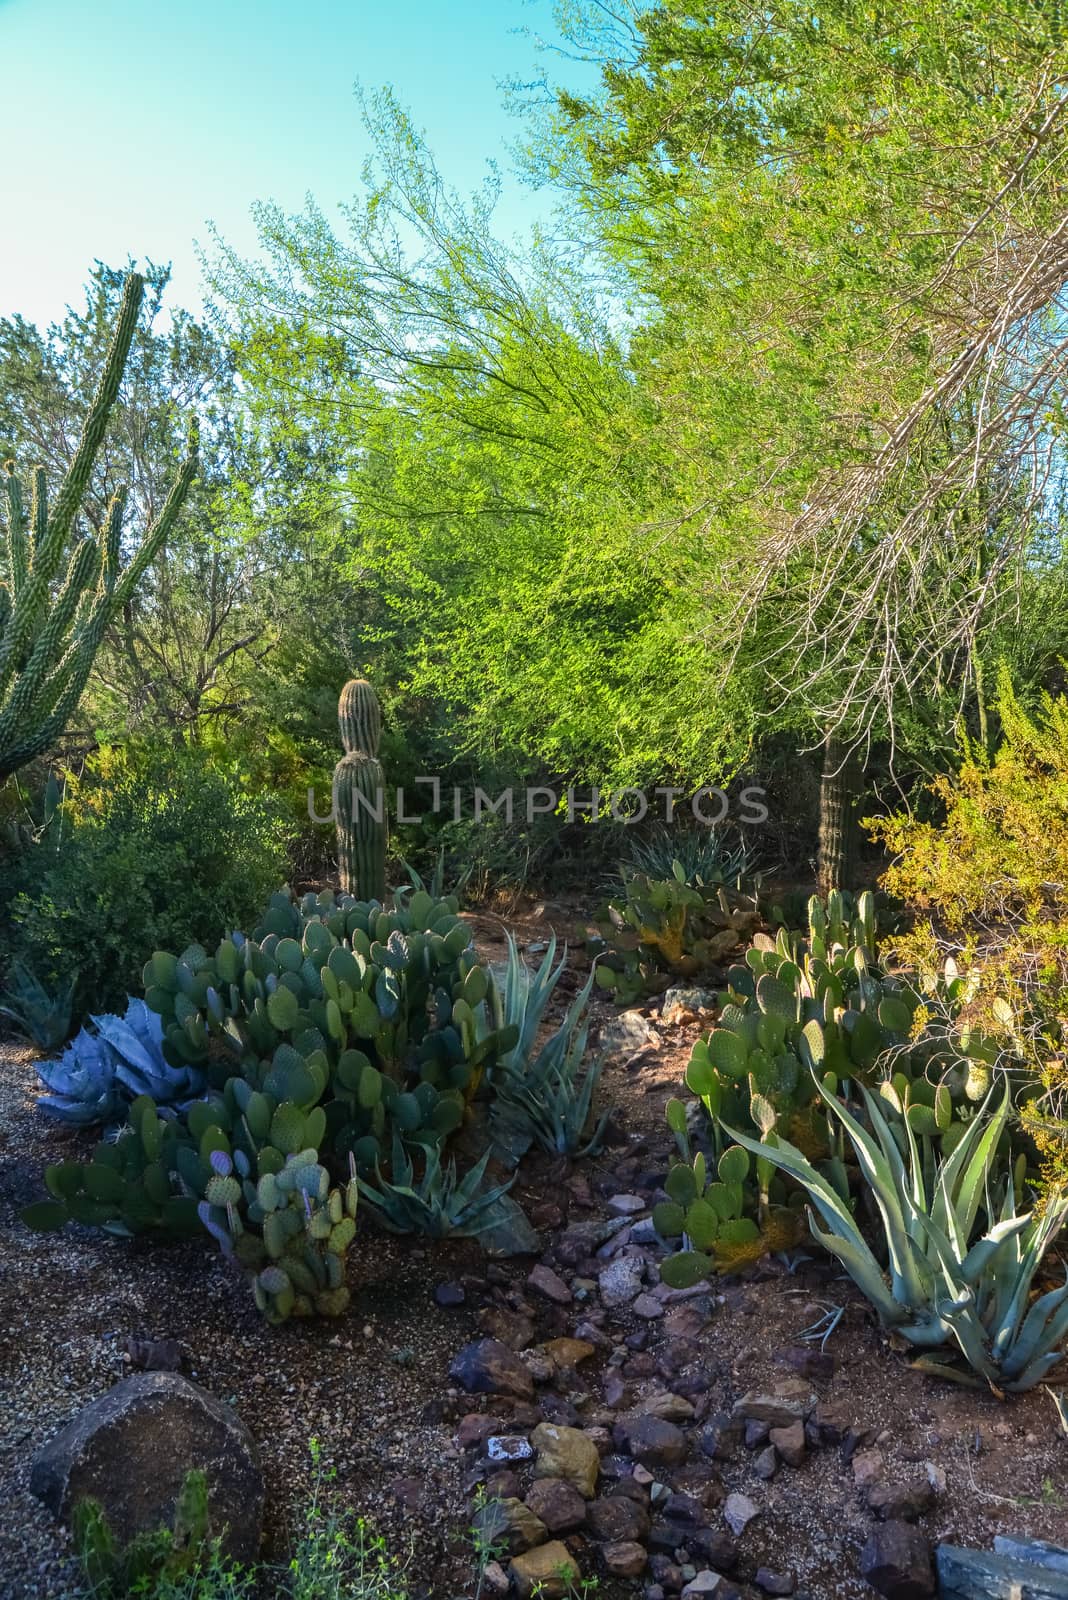 USA, PHENIX, ARIZONA- NOVEMBER 17, 2019:  A group of succulent plants Agave and Opuntia cacti in the botanical garden of Phoenix, Arizona, USA